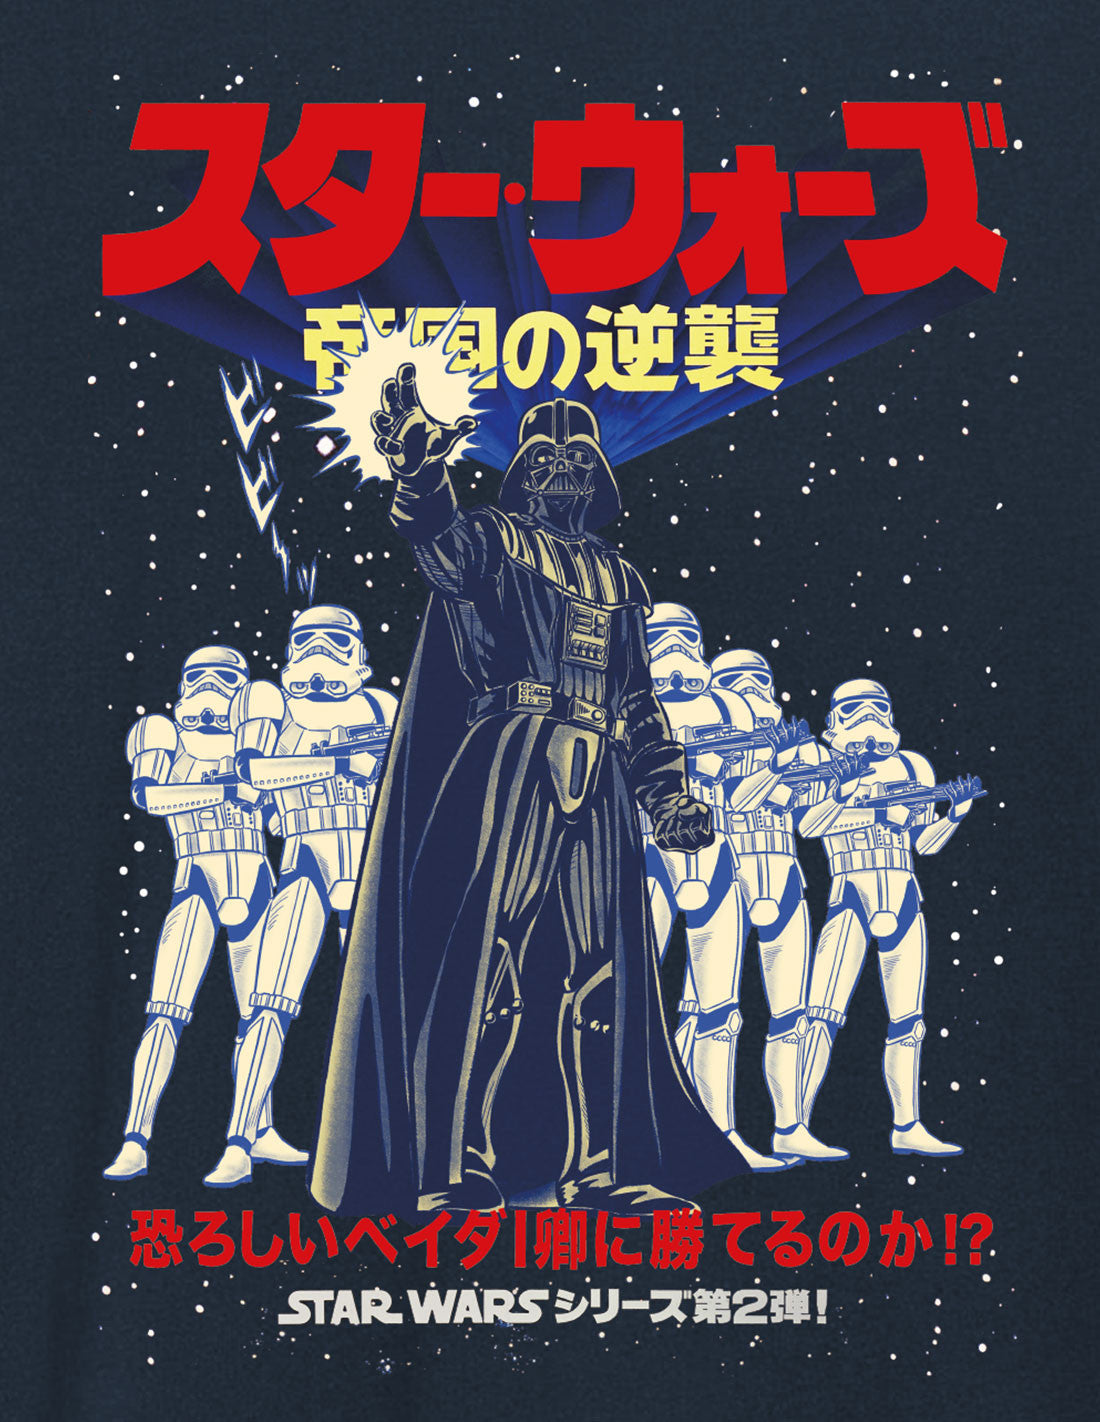 Star Wars Tee - Japanese Poster